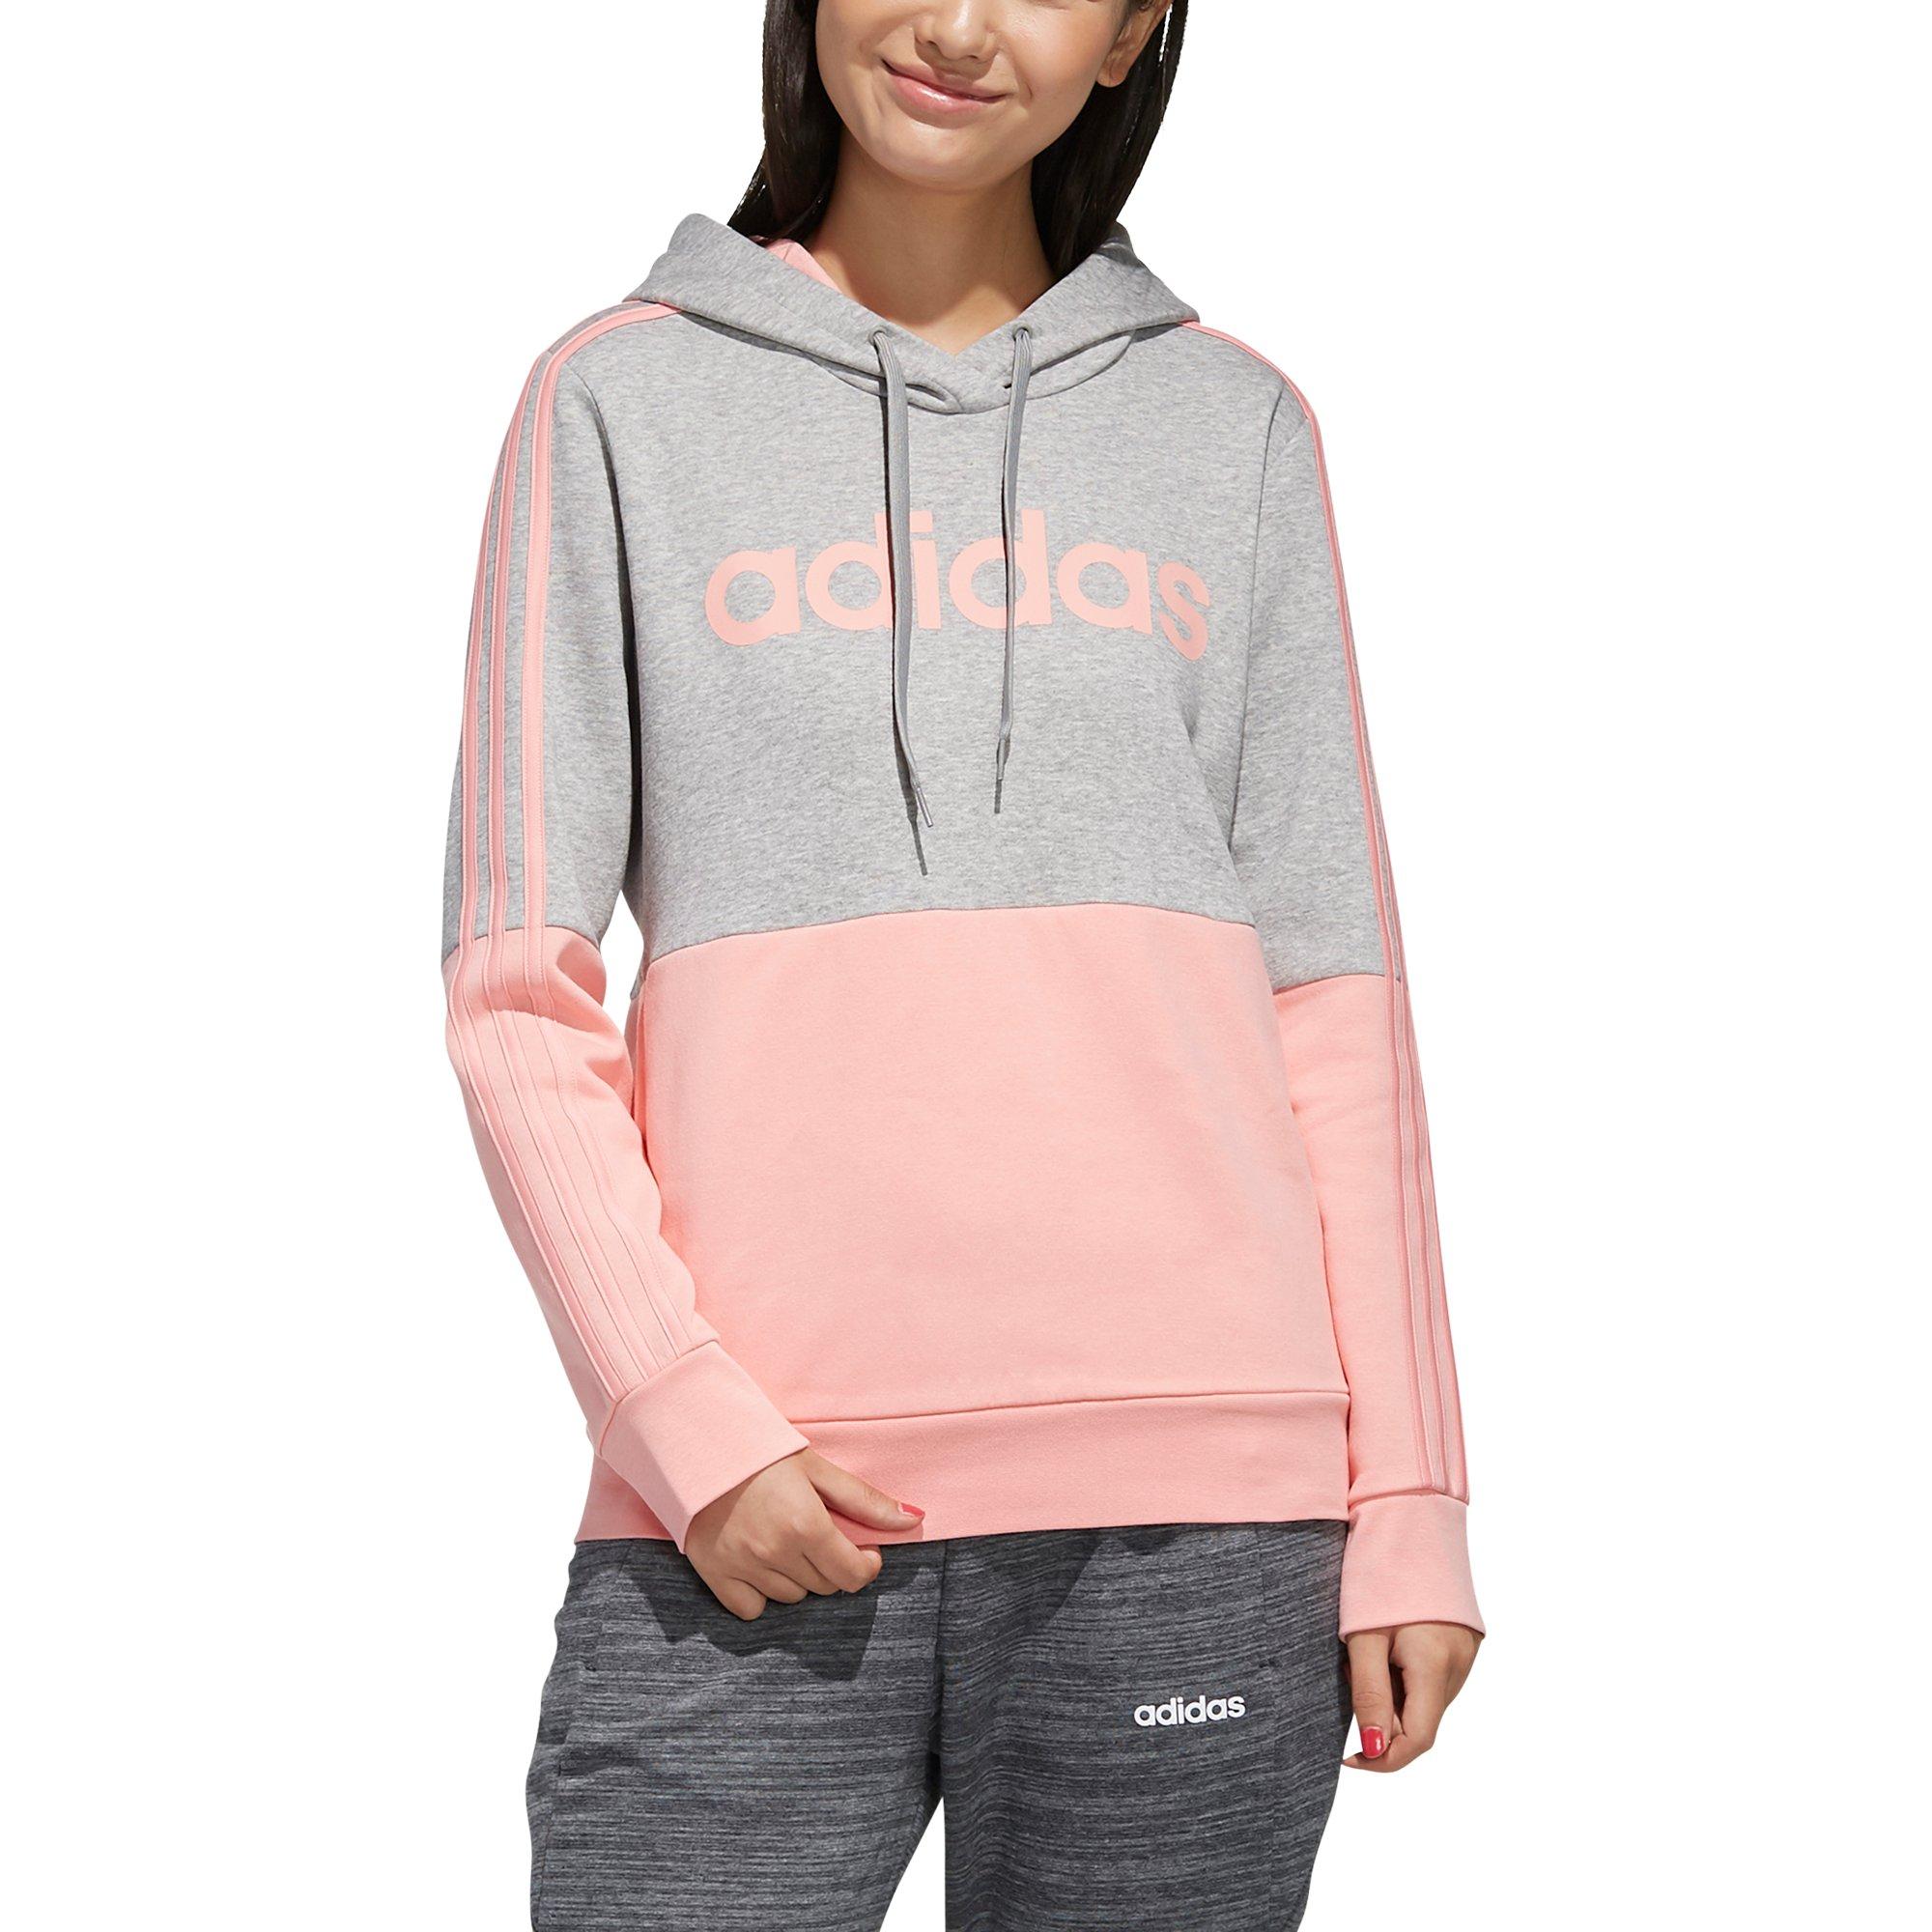 grey and pink adidas sweatshirt